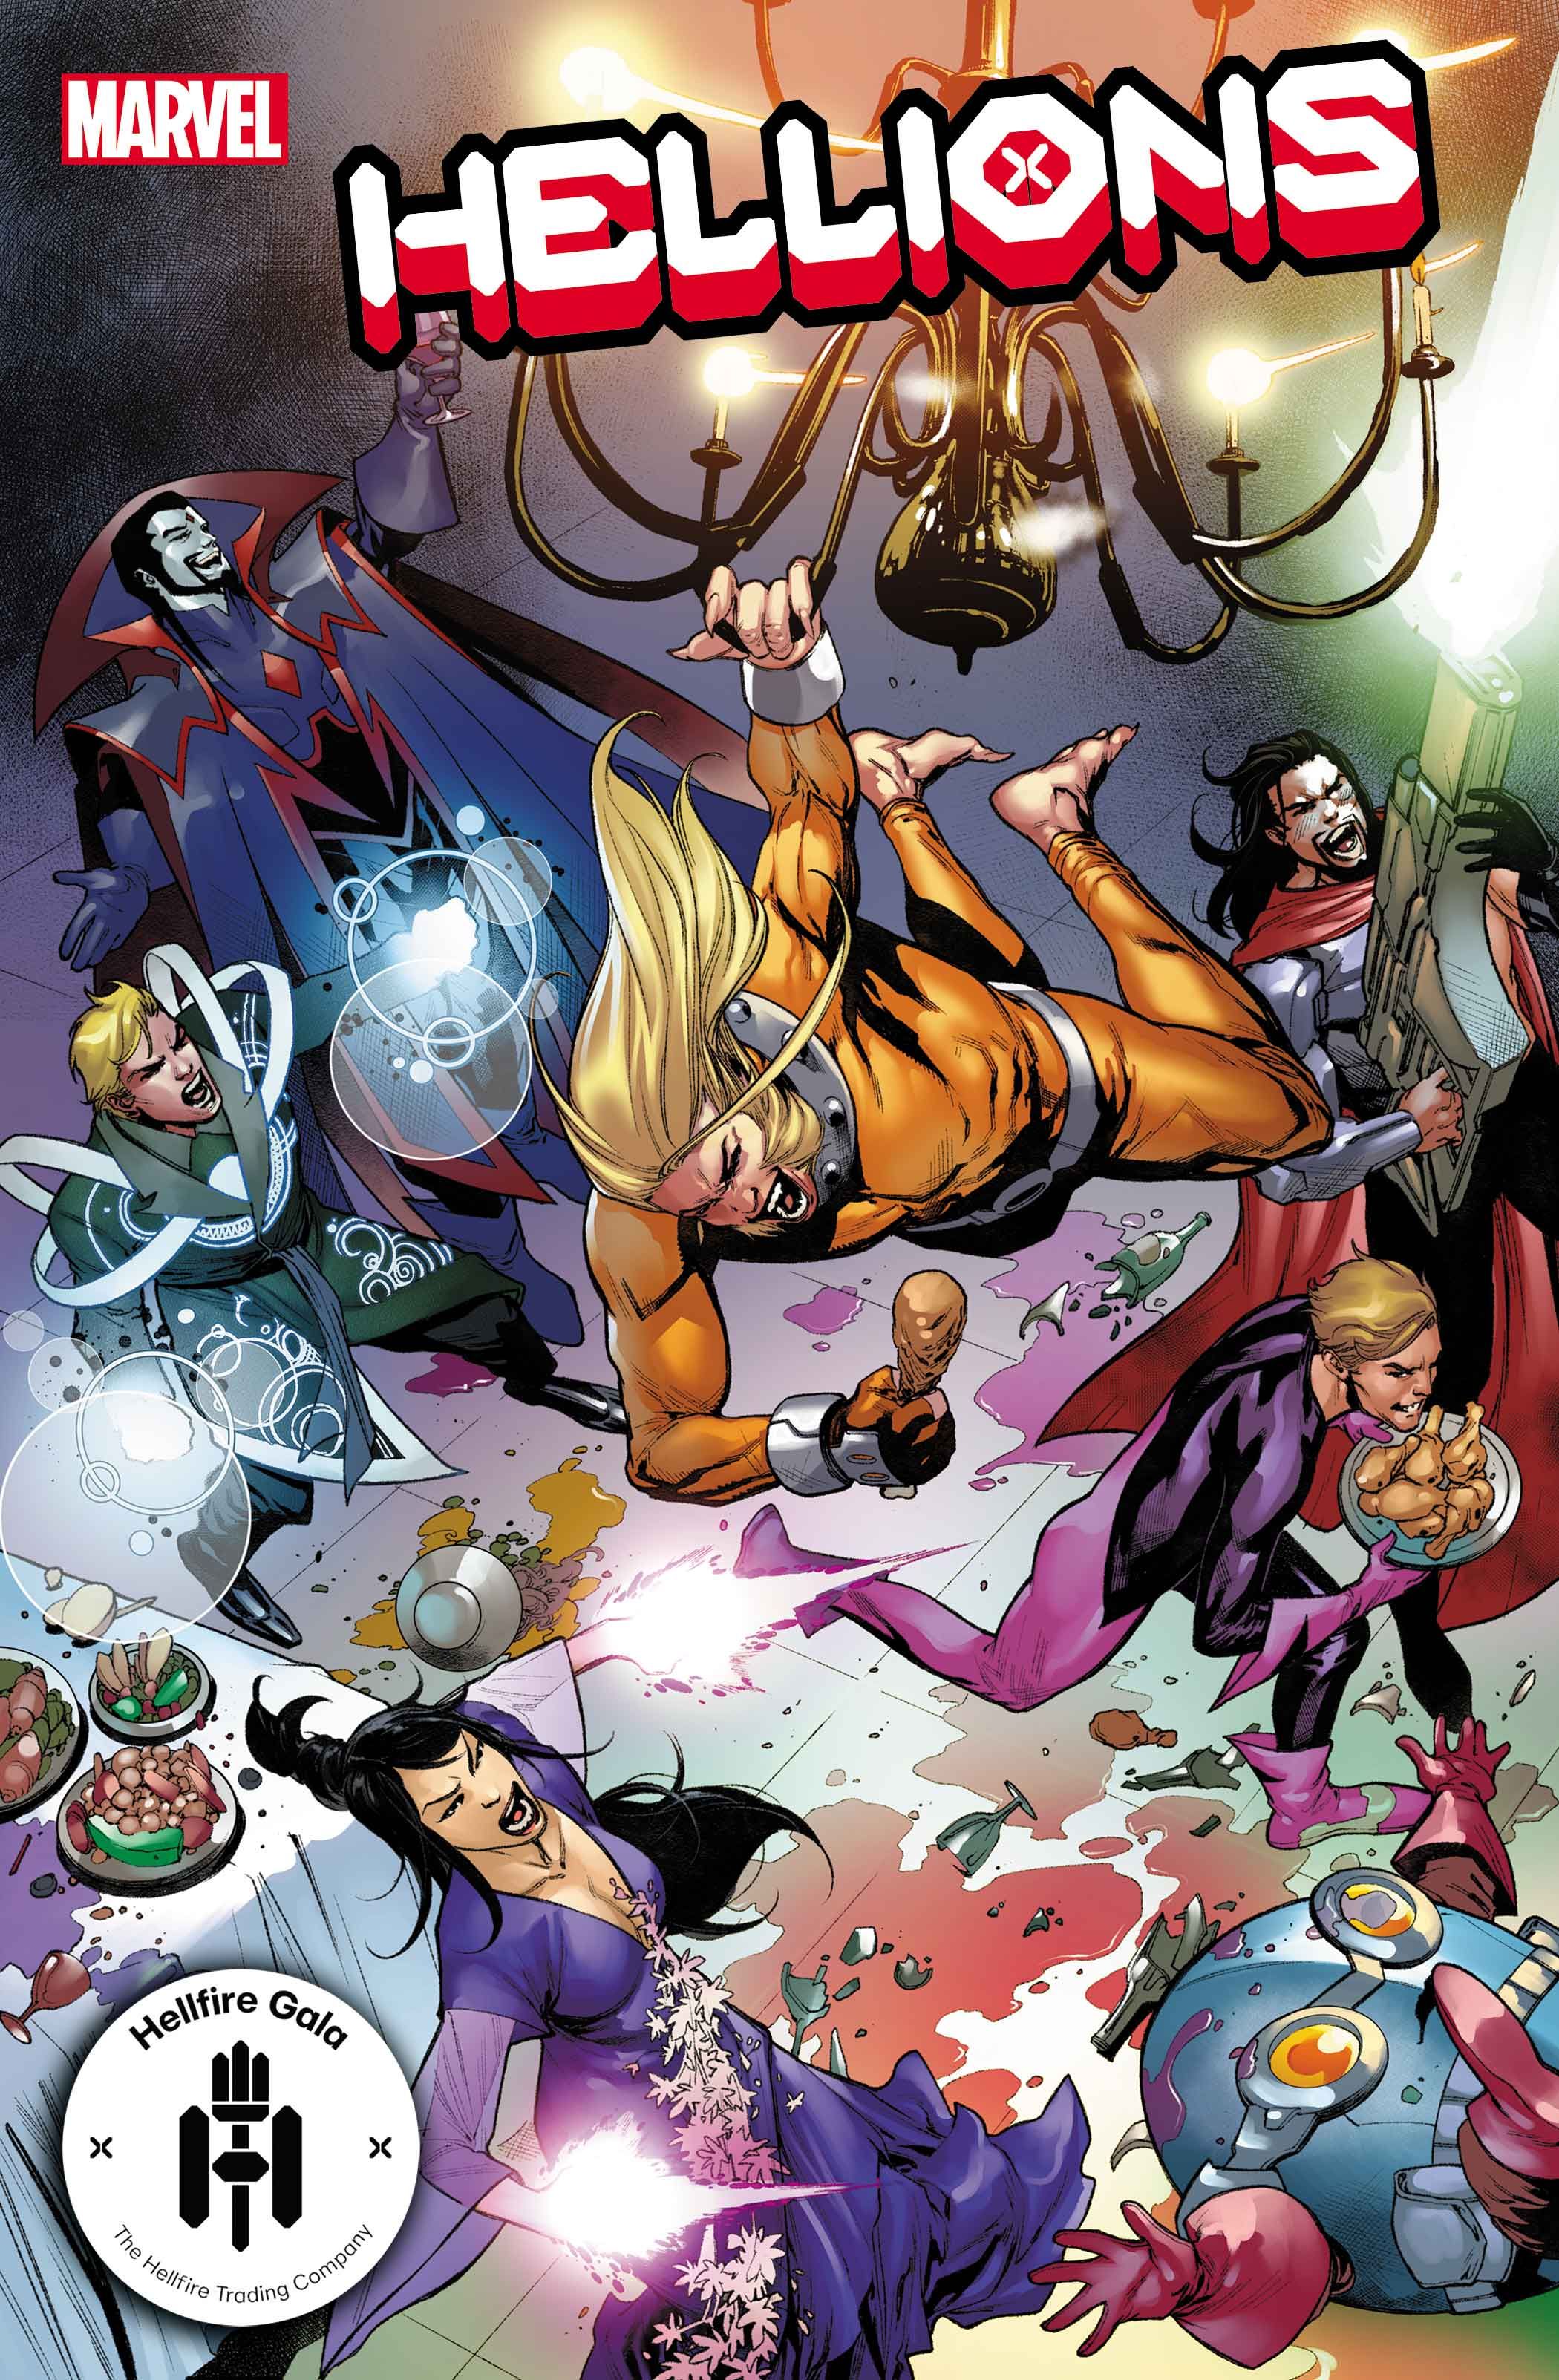 X-Men’s ‘Hellfire Gala’ Will Change Marvel’s Future in One Night